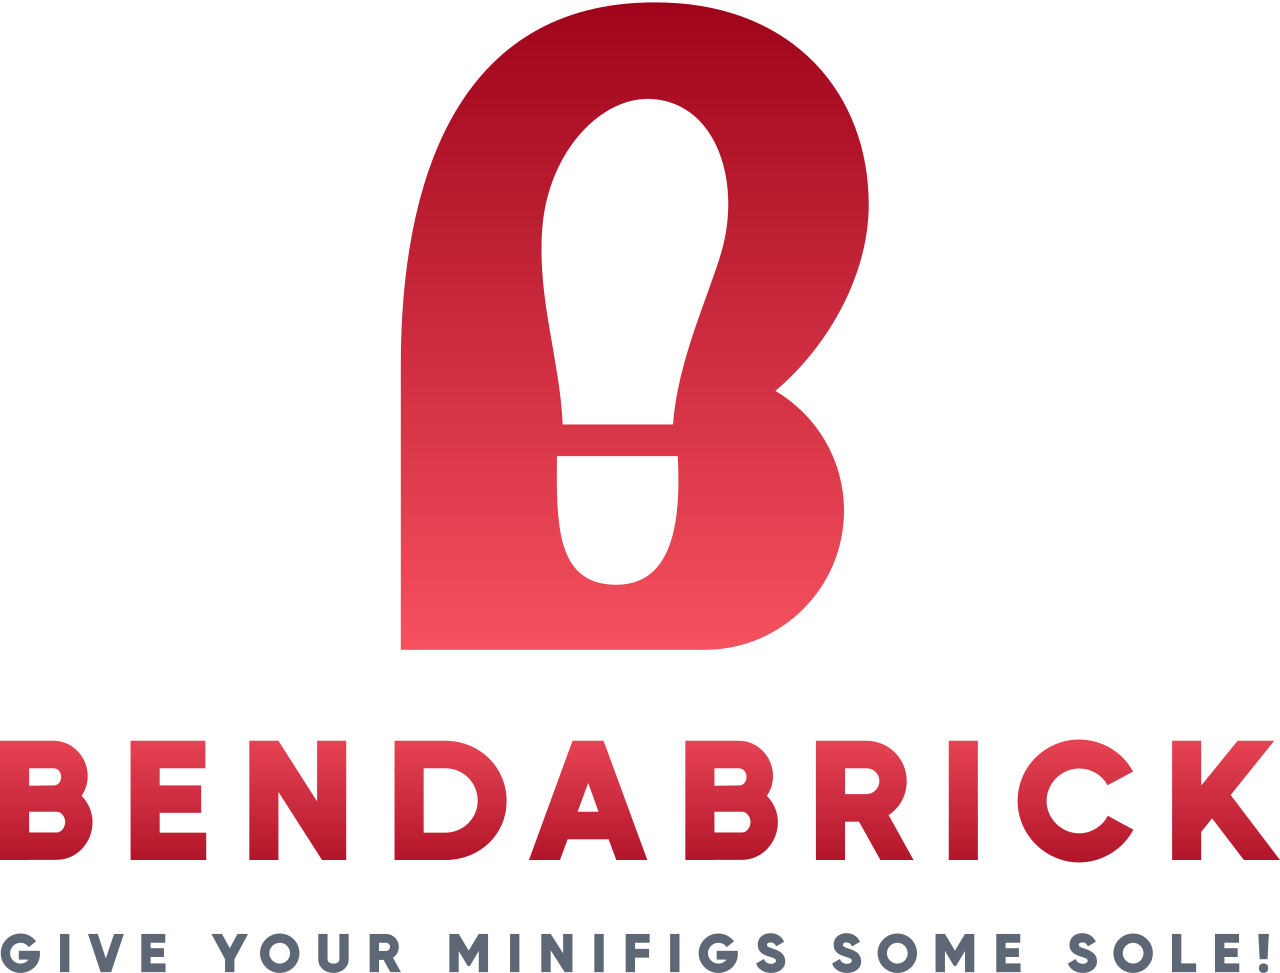 bendabrick's logo